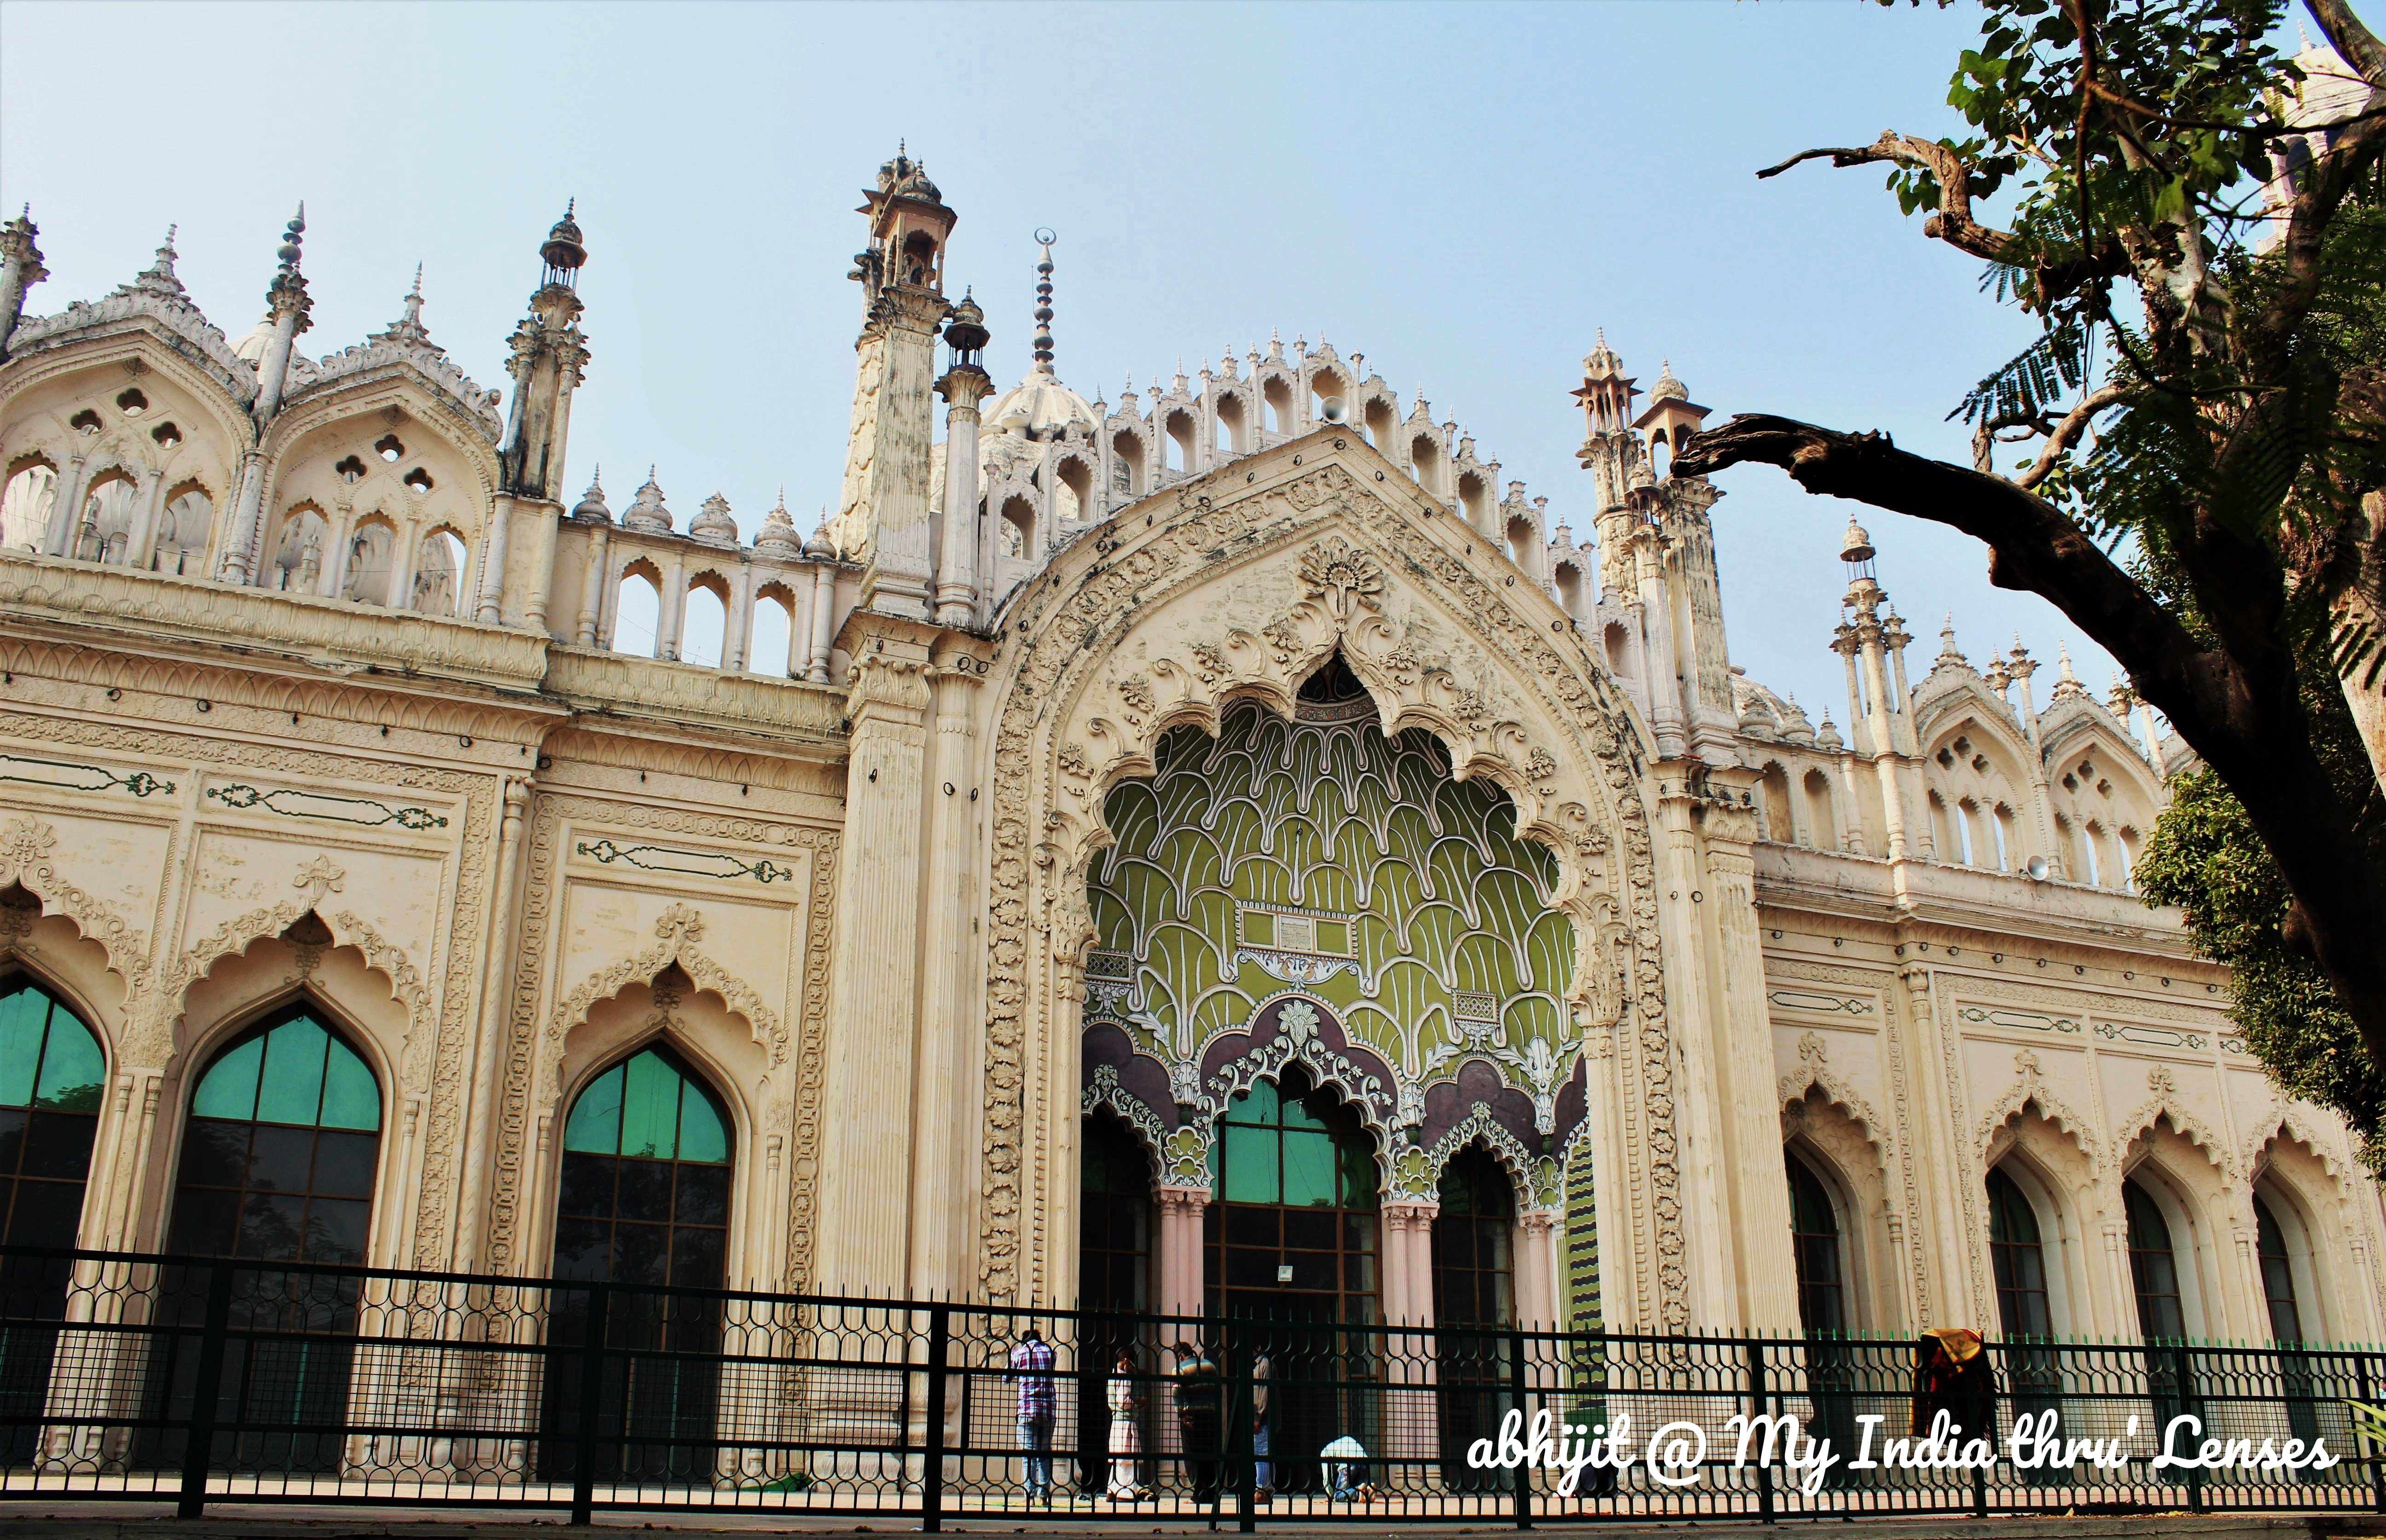 The Jama Masjid, Lucknow